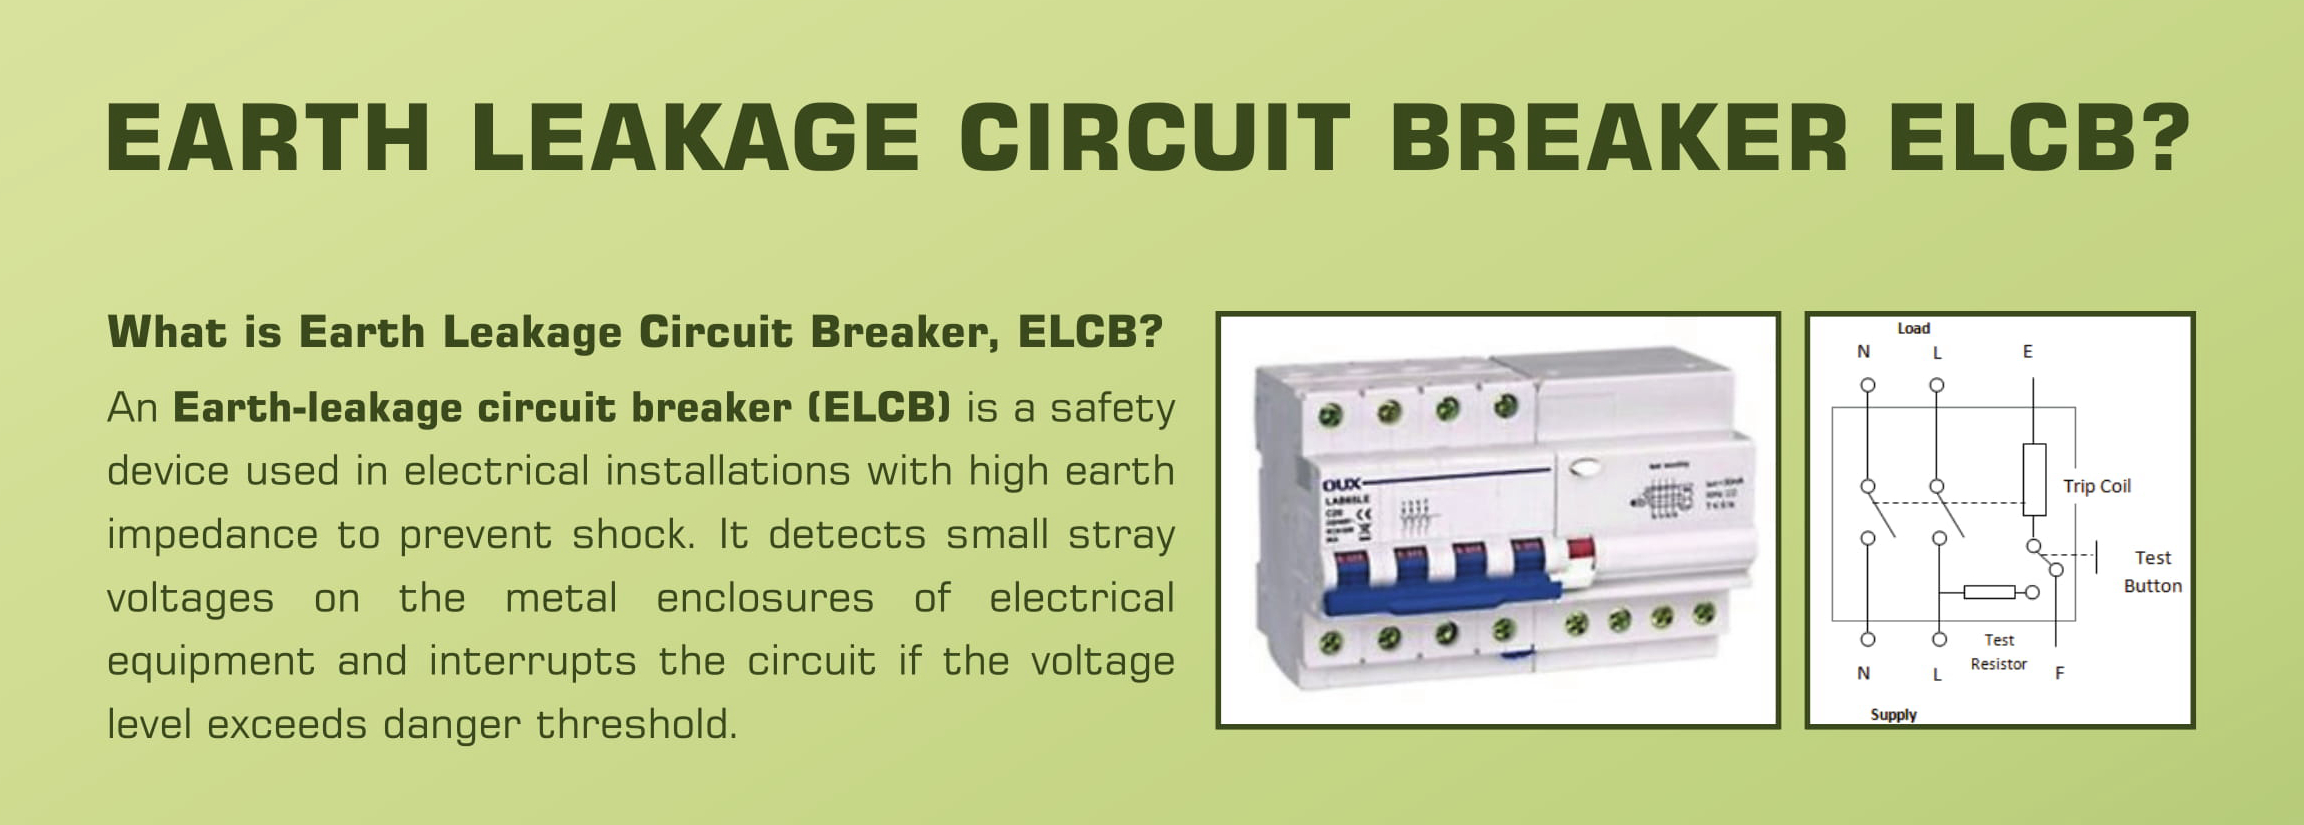 Earth Leakage Circuit Breaker Elcb